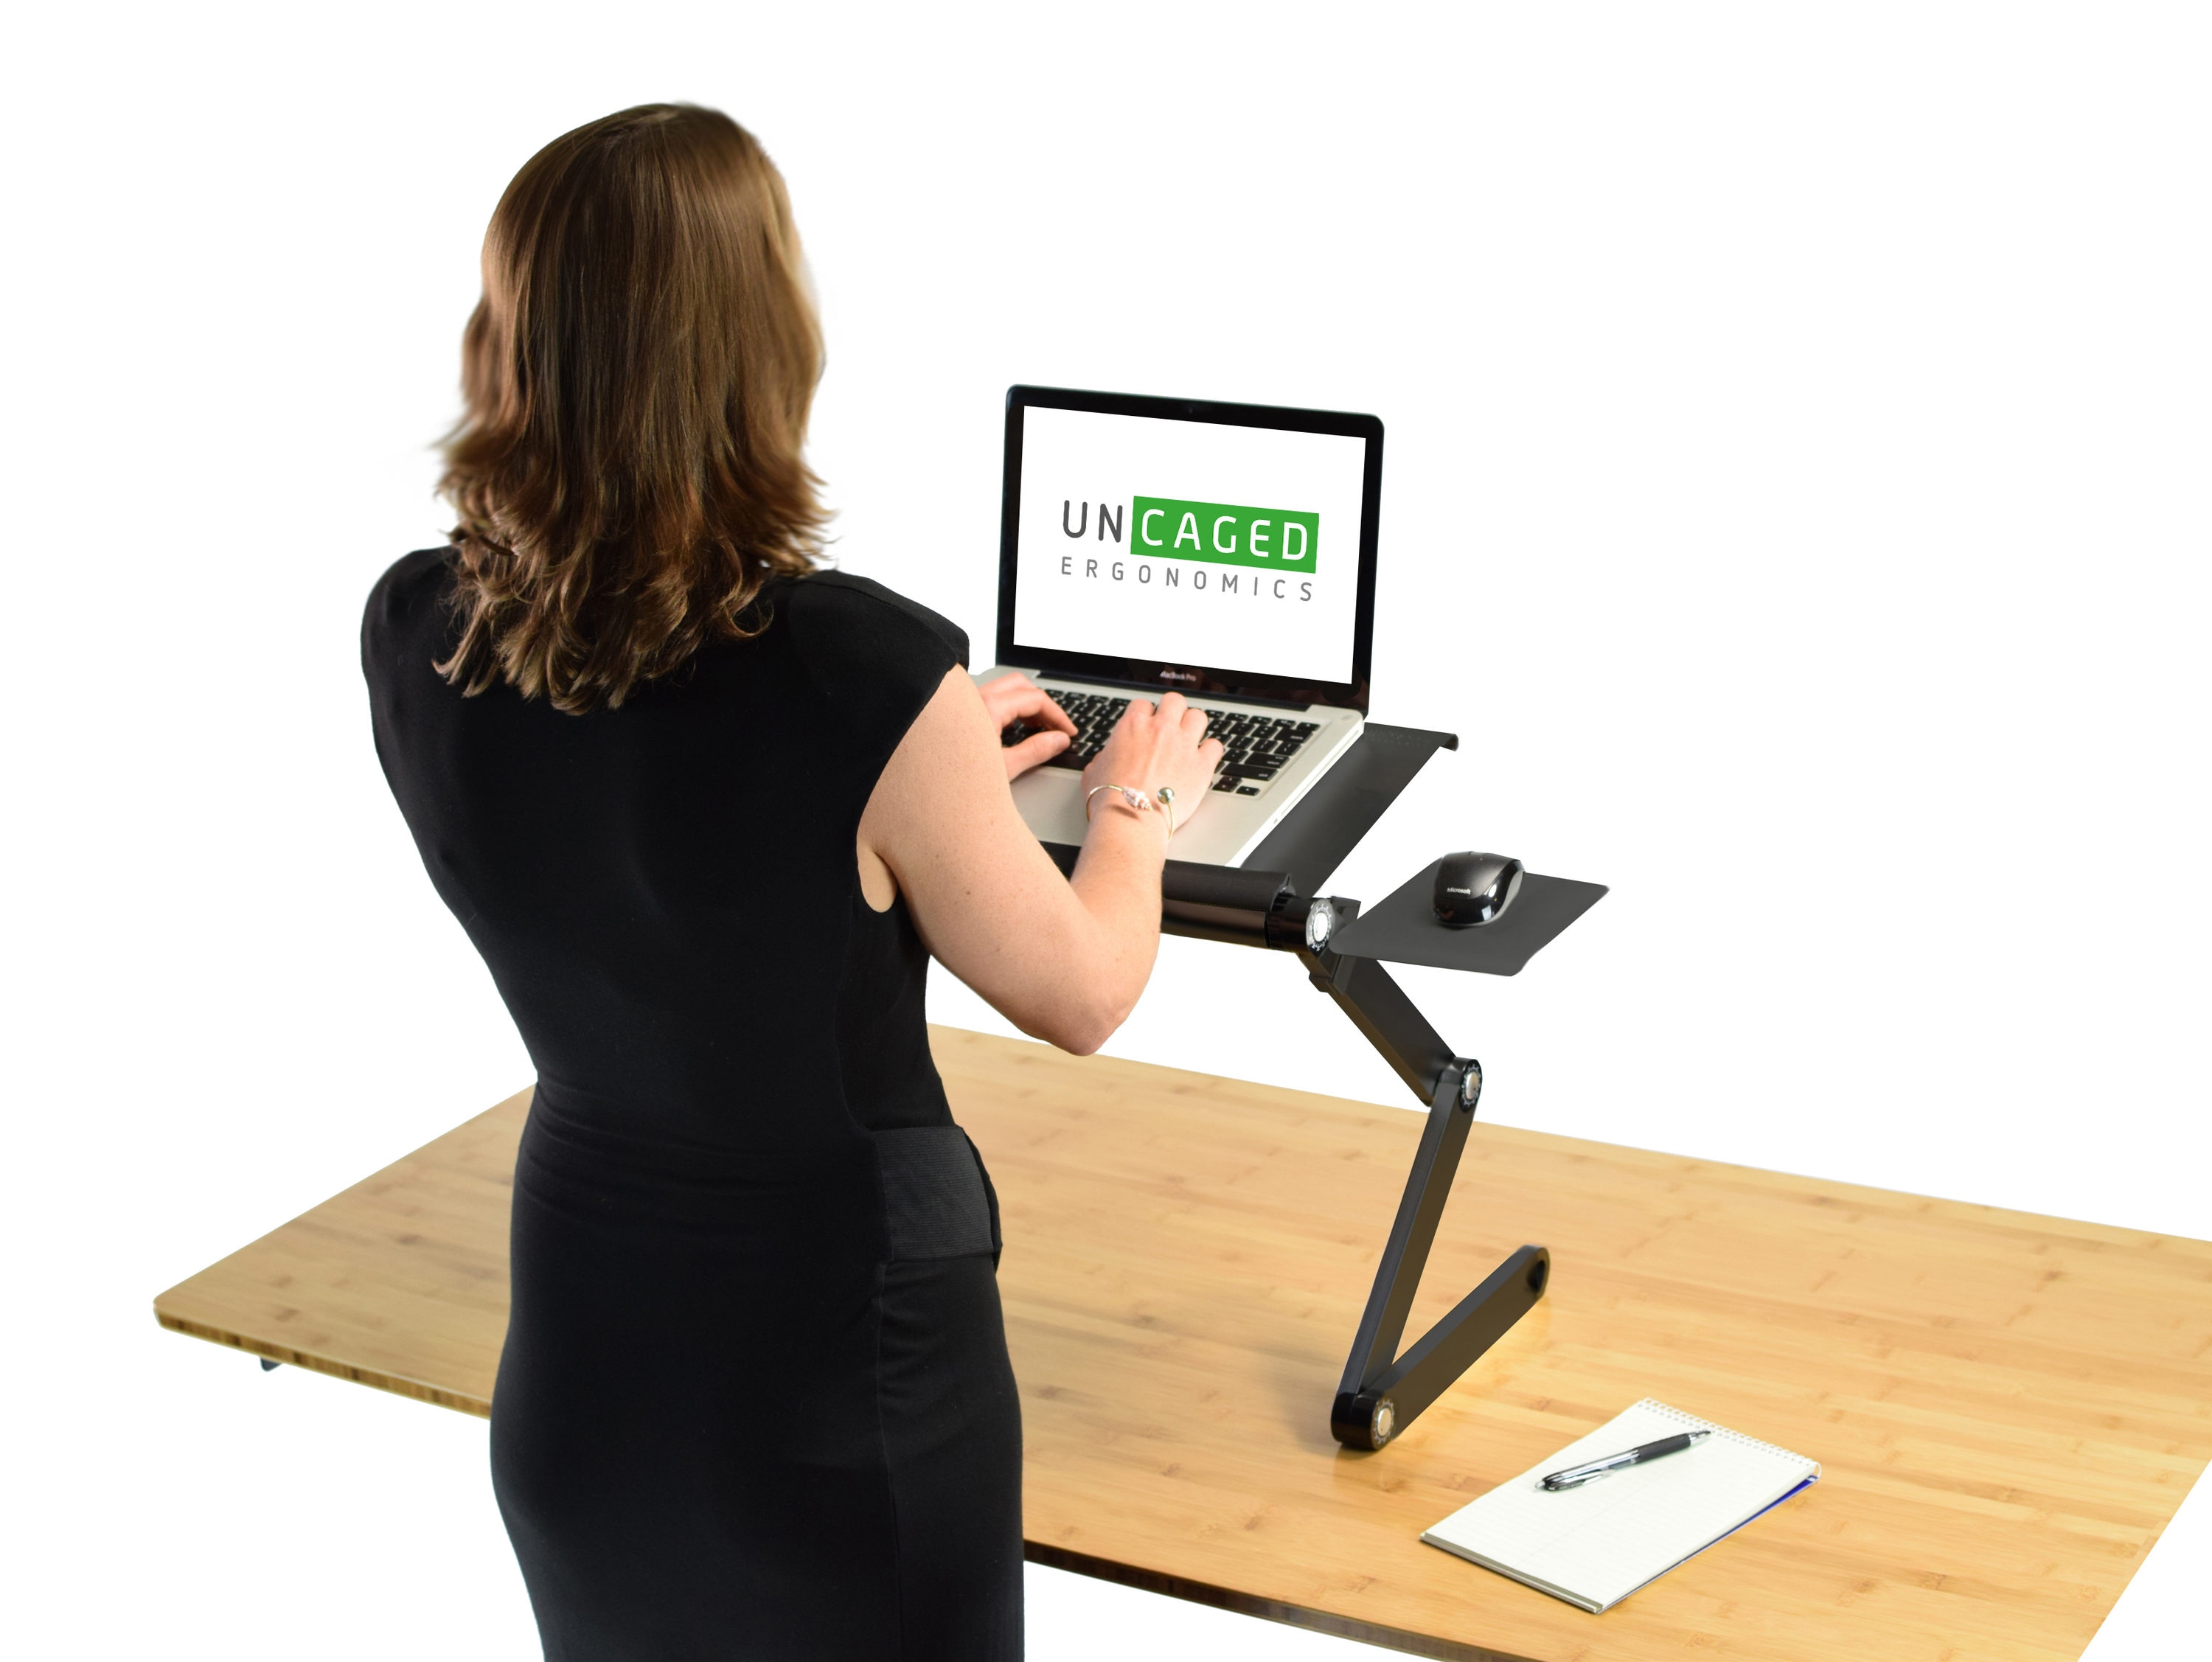 Laptop Stand & Standing Desk Black - Uncaged Ergonomics